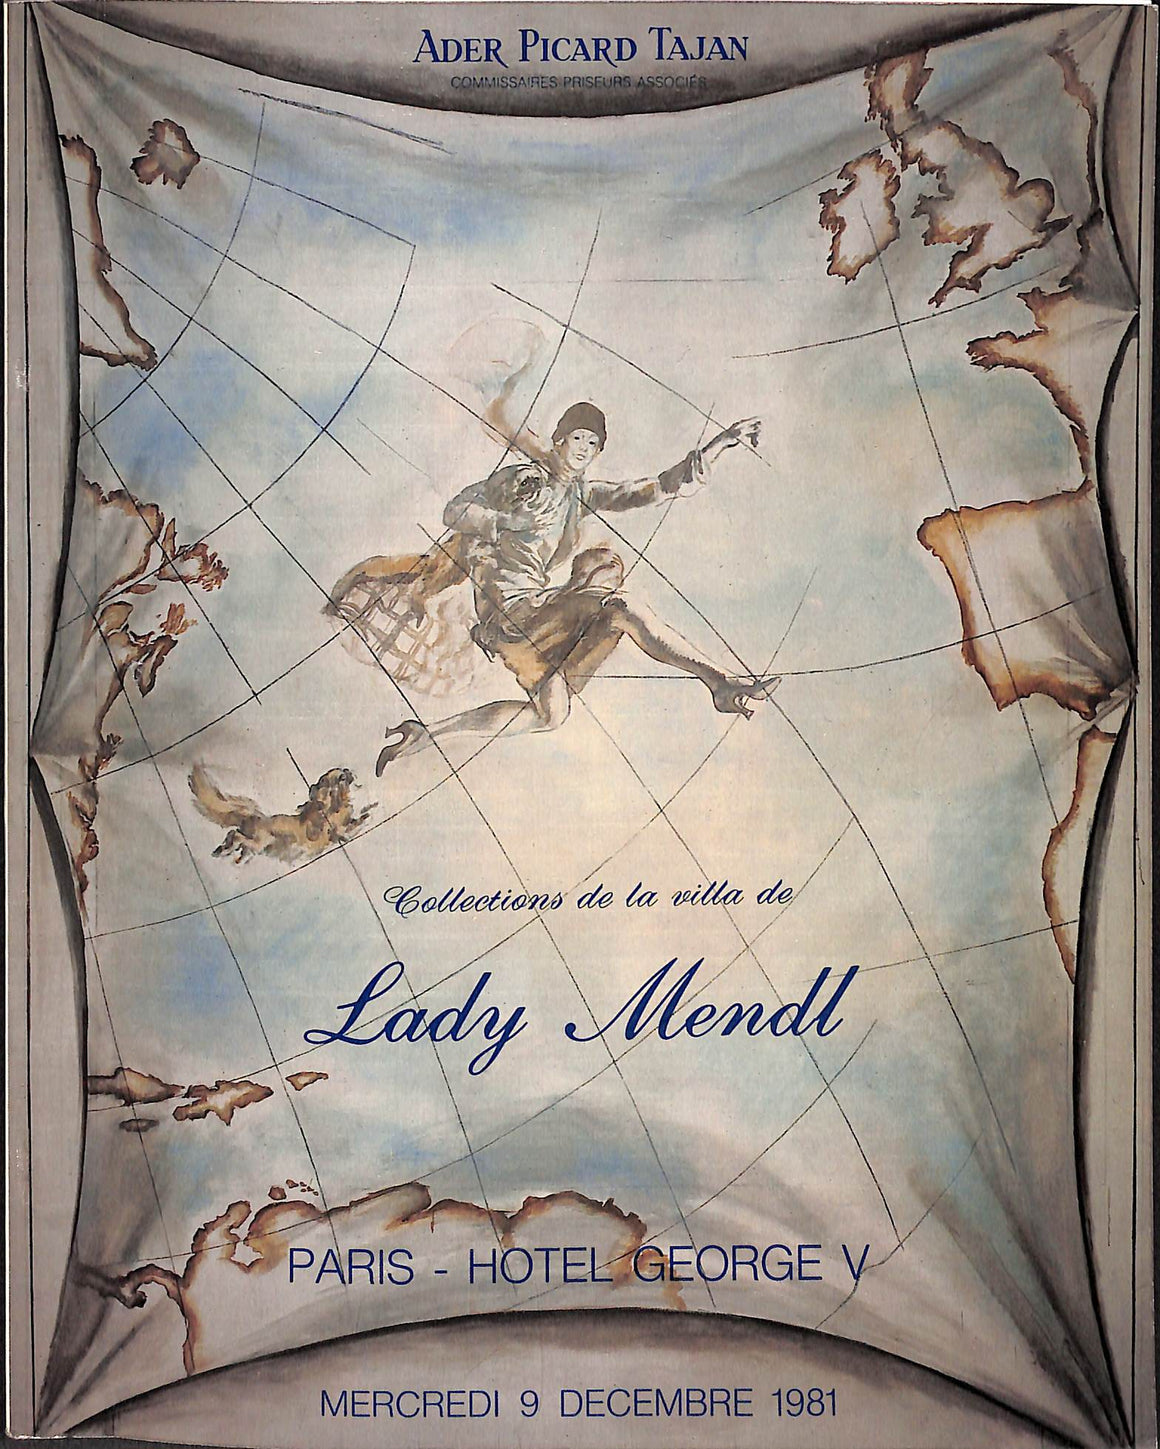 "Collections De La Villa De Lady Mendl" 1981 TAJAN, Ader Picard